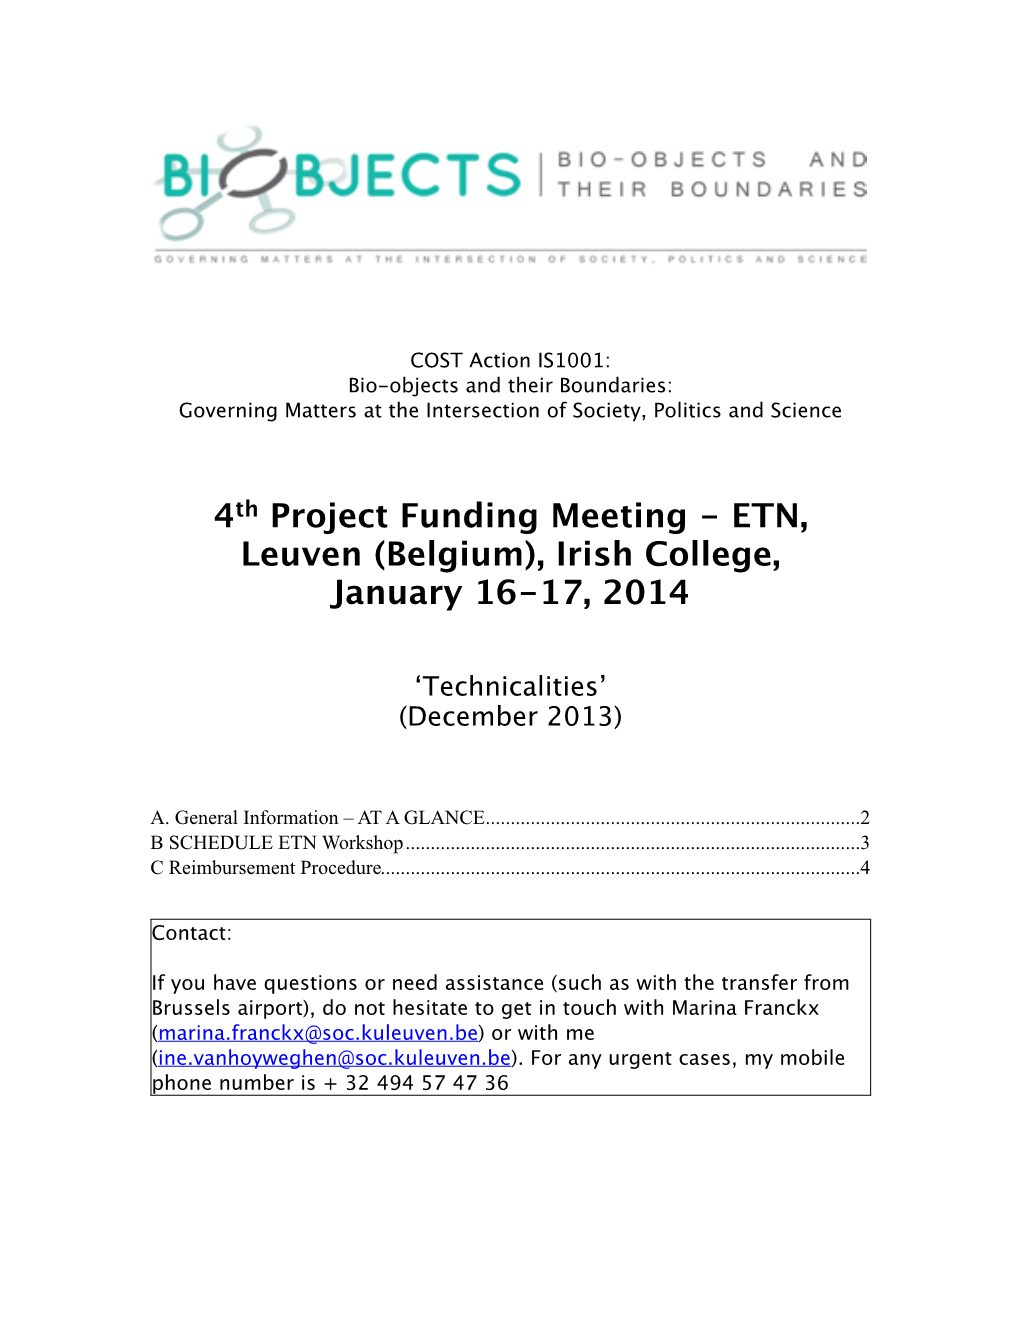 4Th Project Funding Meeting - ETN, Leuven (Belgium), Irish College, January 16-17, 2014